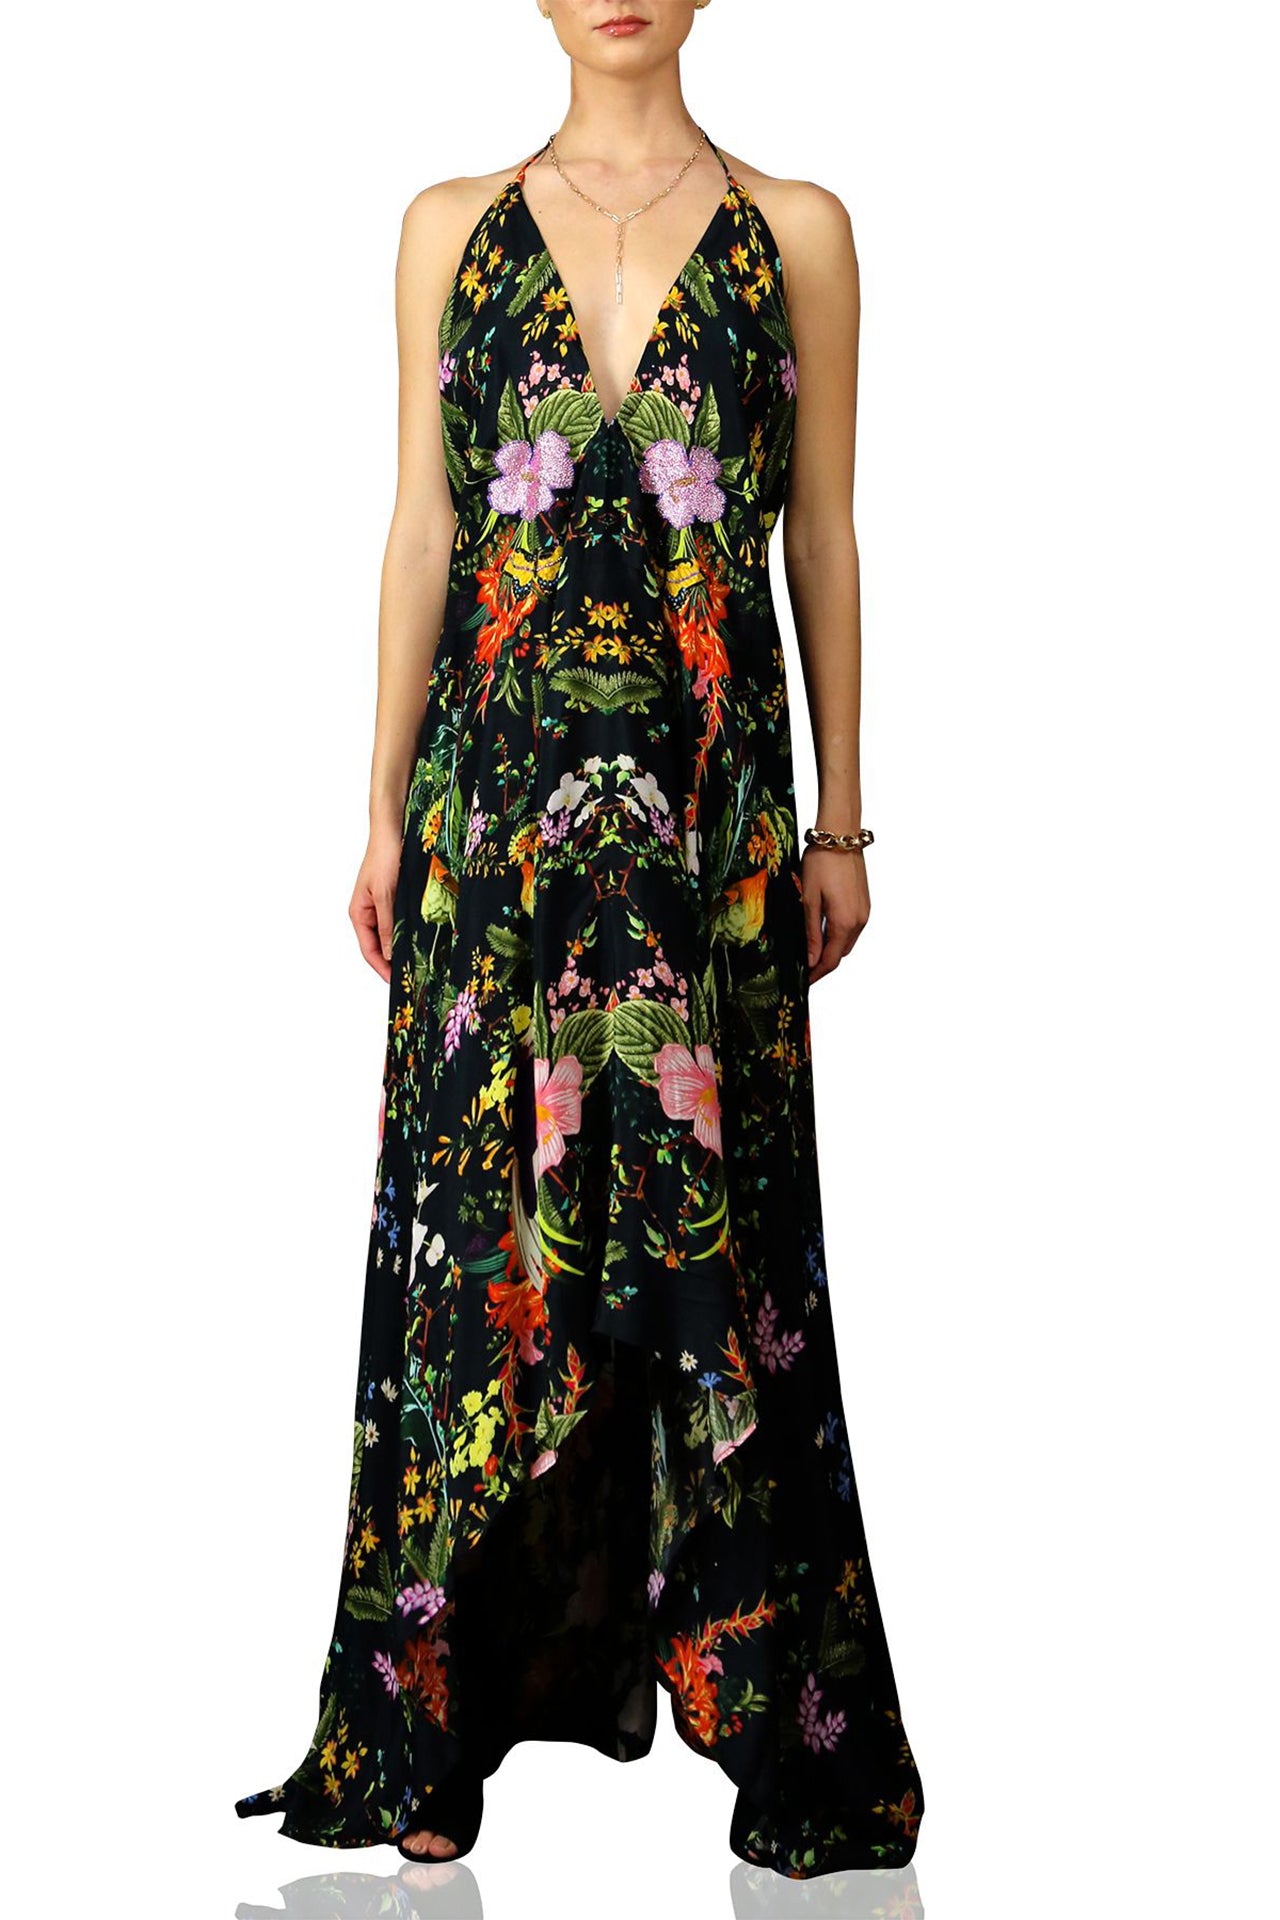 "long dresses for women" "infinity plus size dress" "Kyle X Shahida" "women's floral maxi dress"